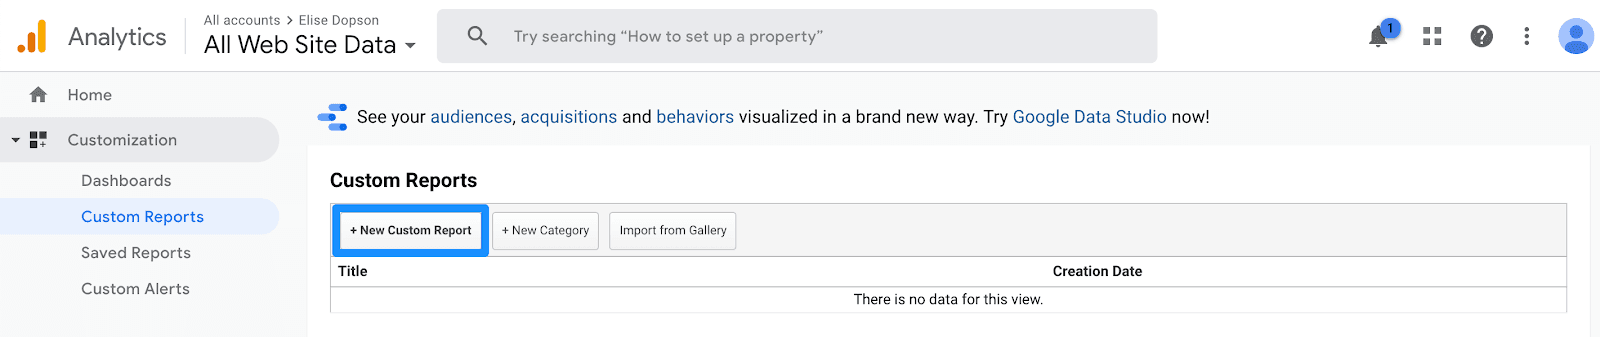 Blank Google Analytics for beginning custom reports